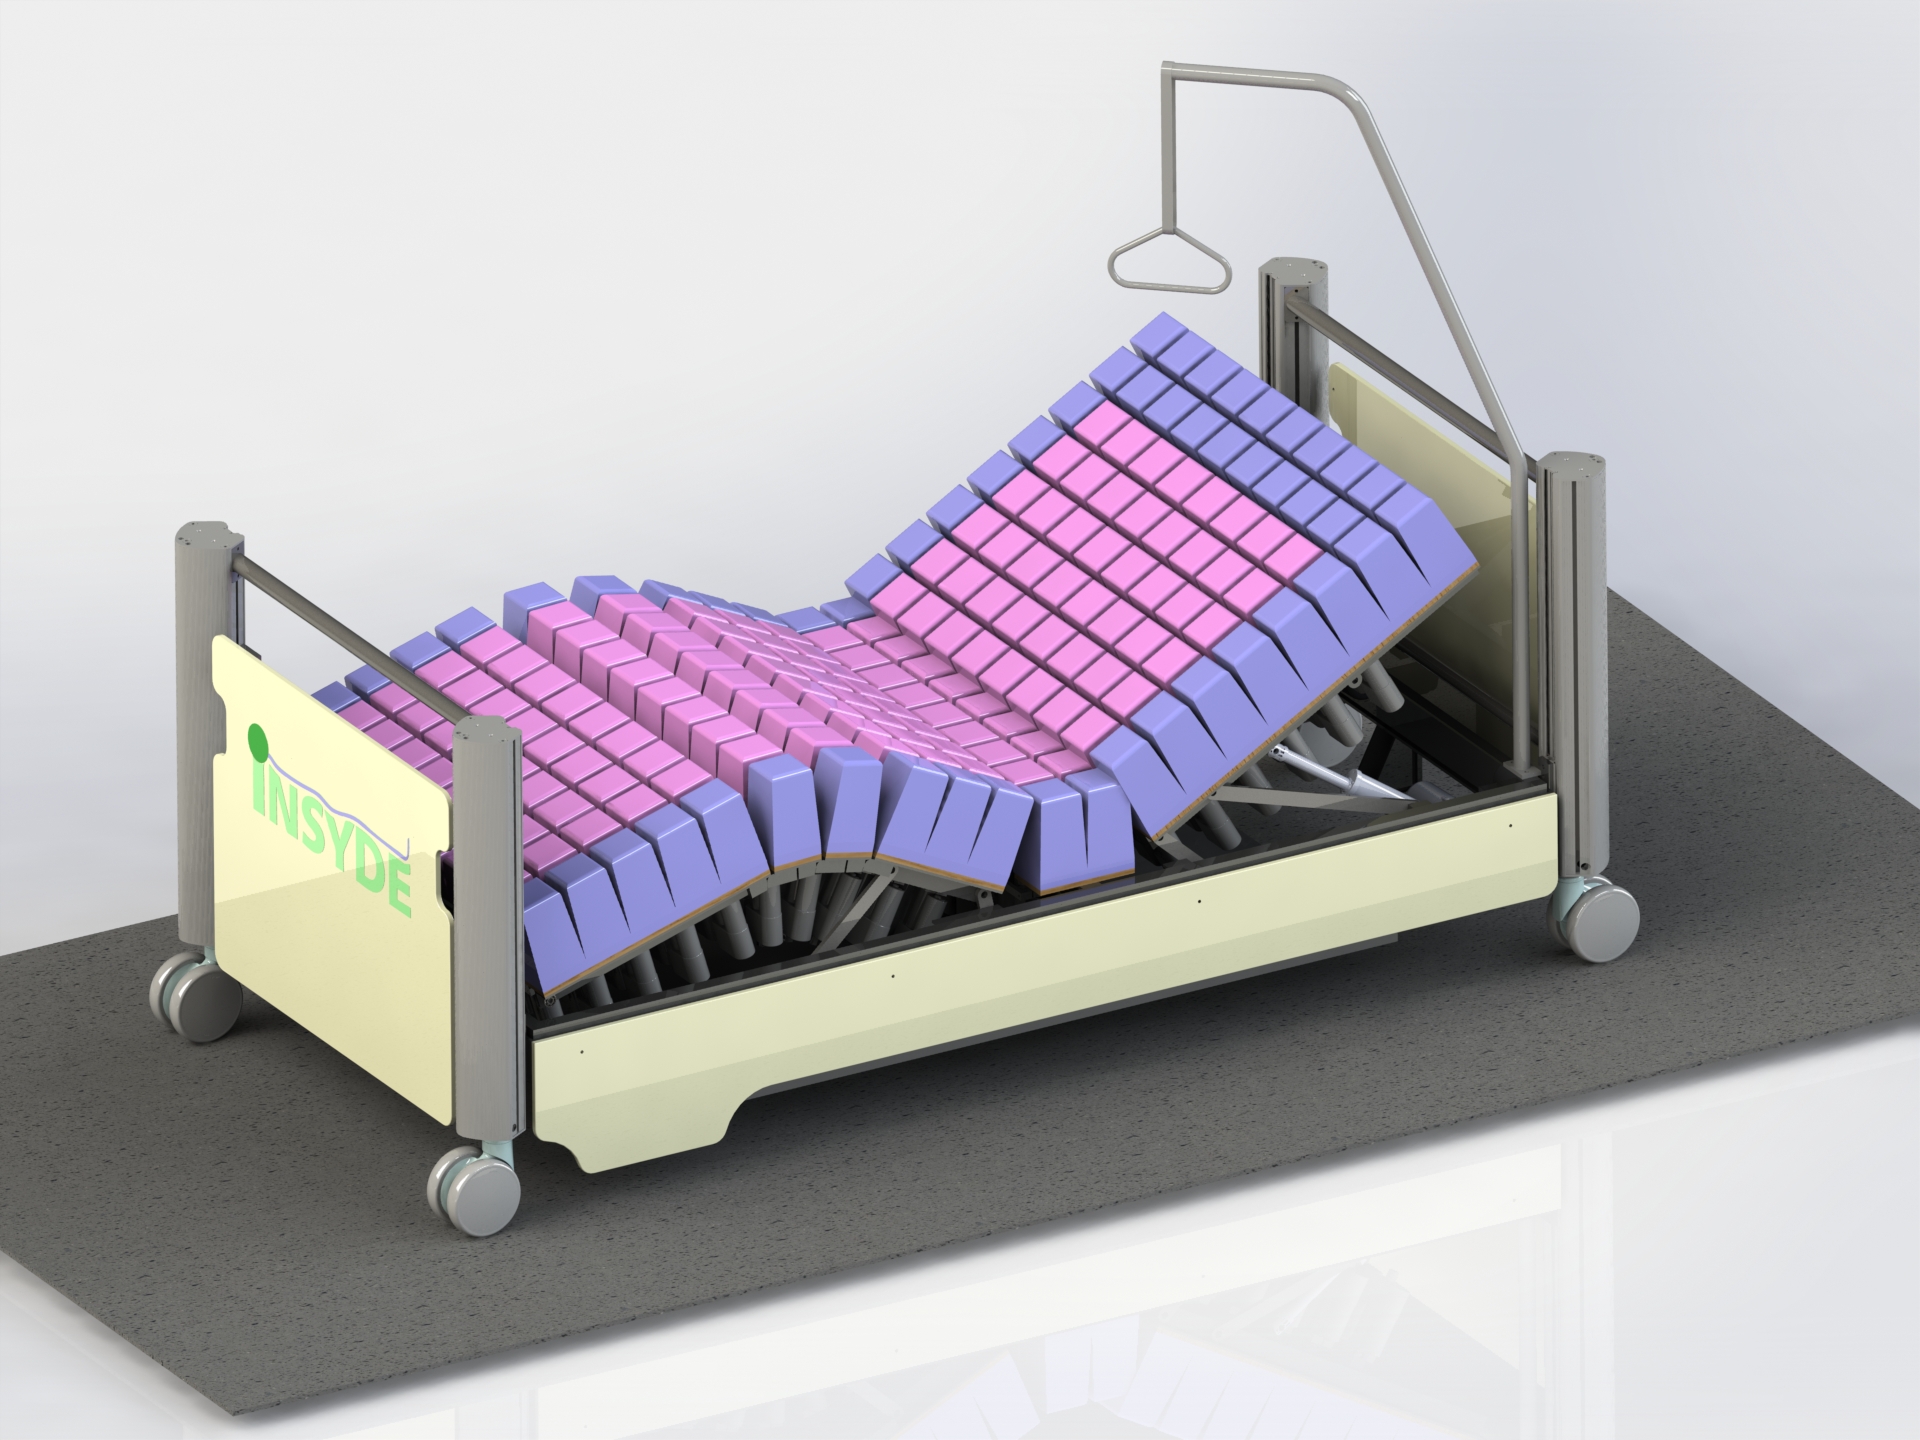 3D model of the intelligent mattress